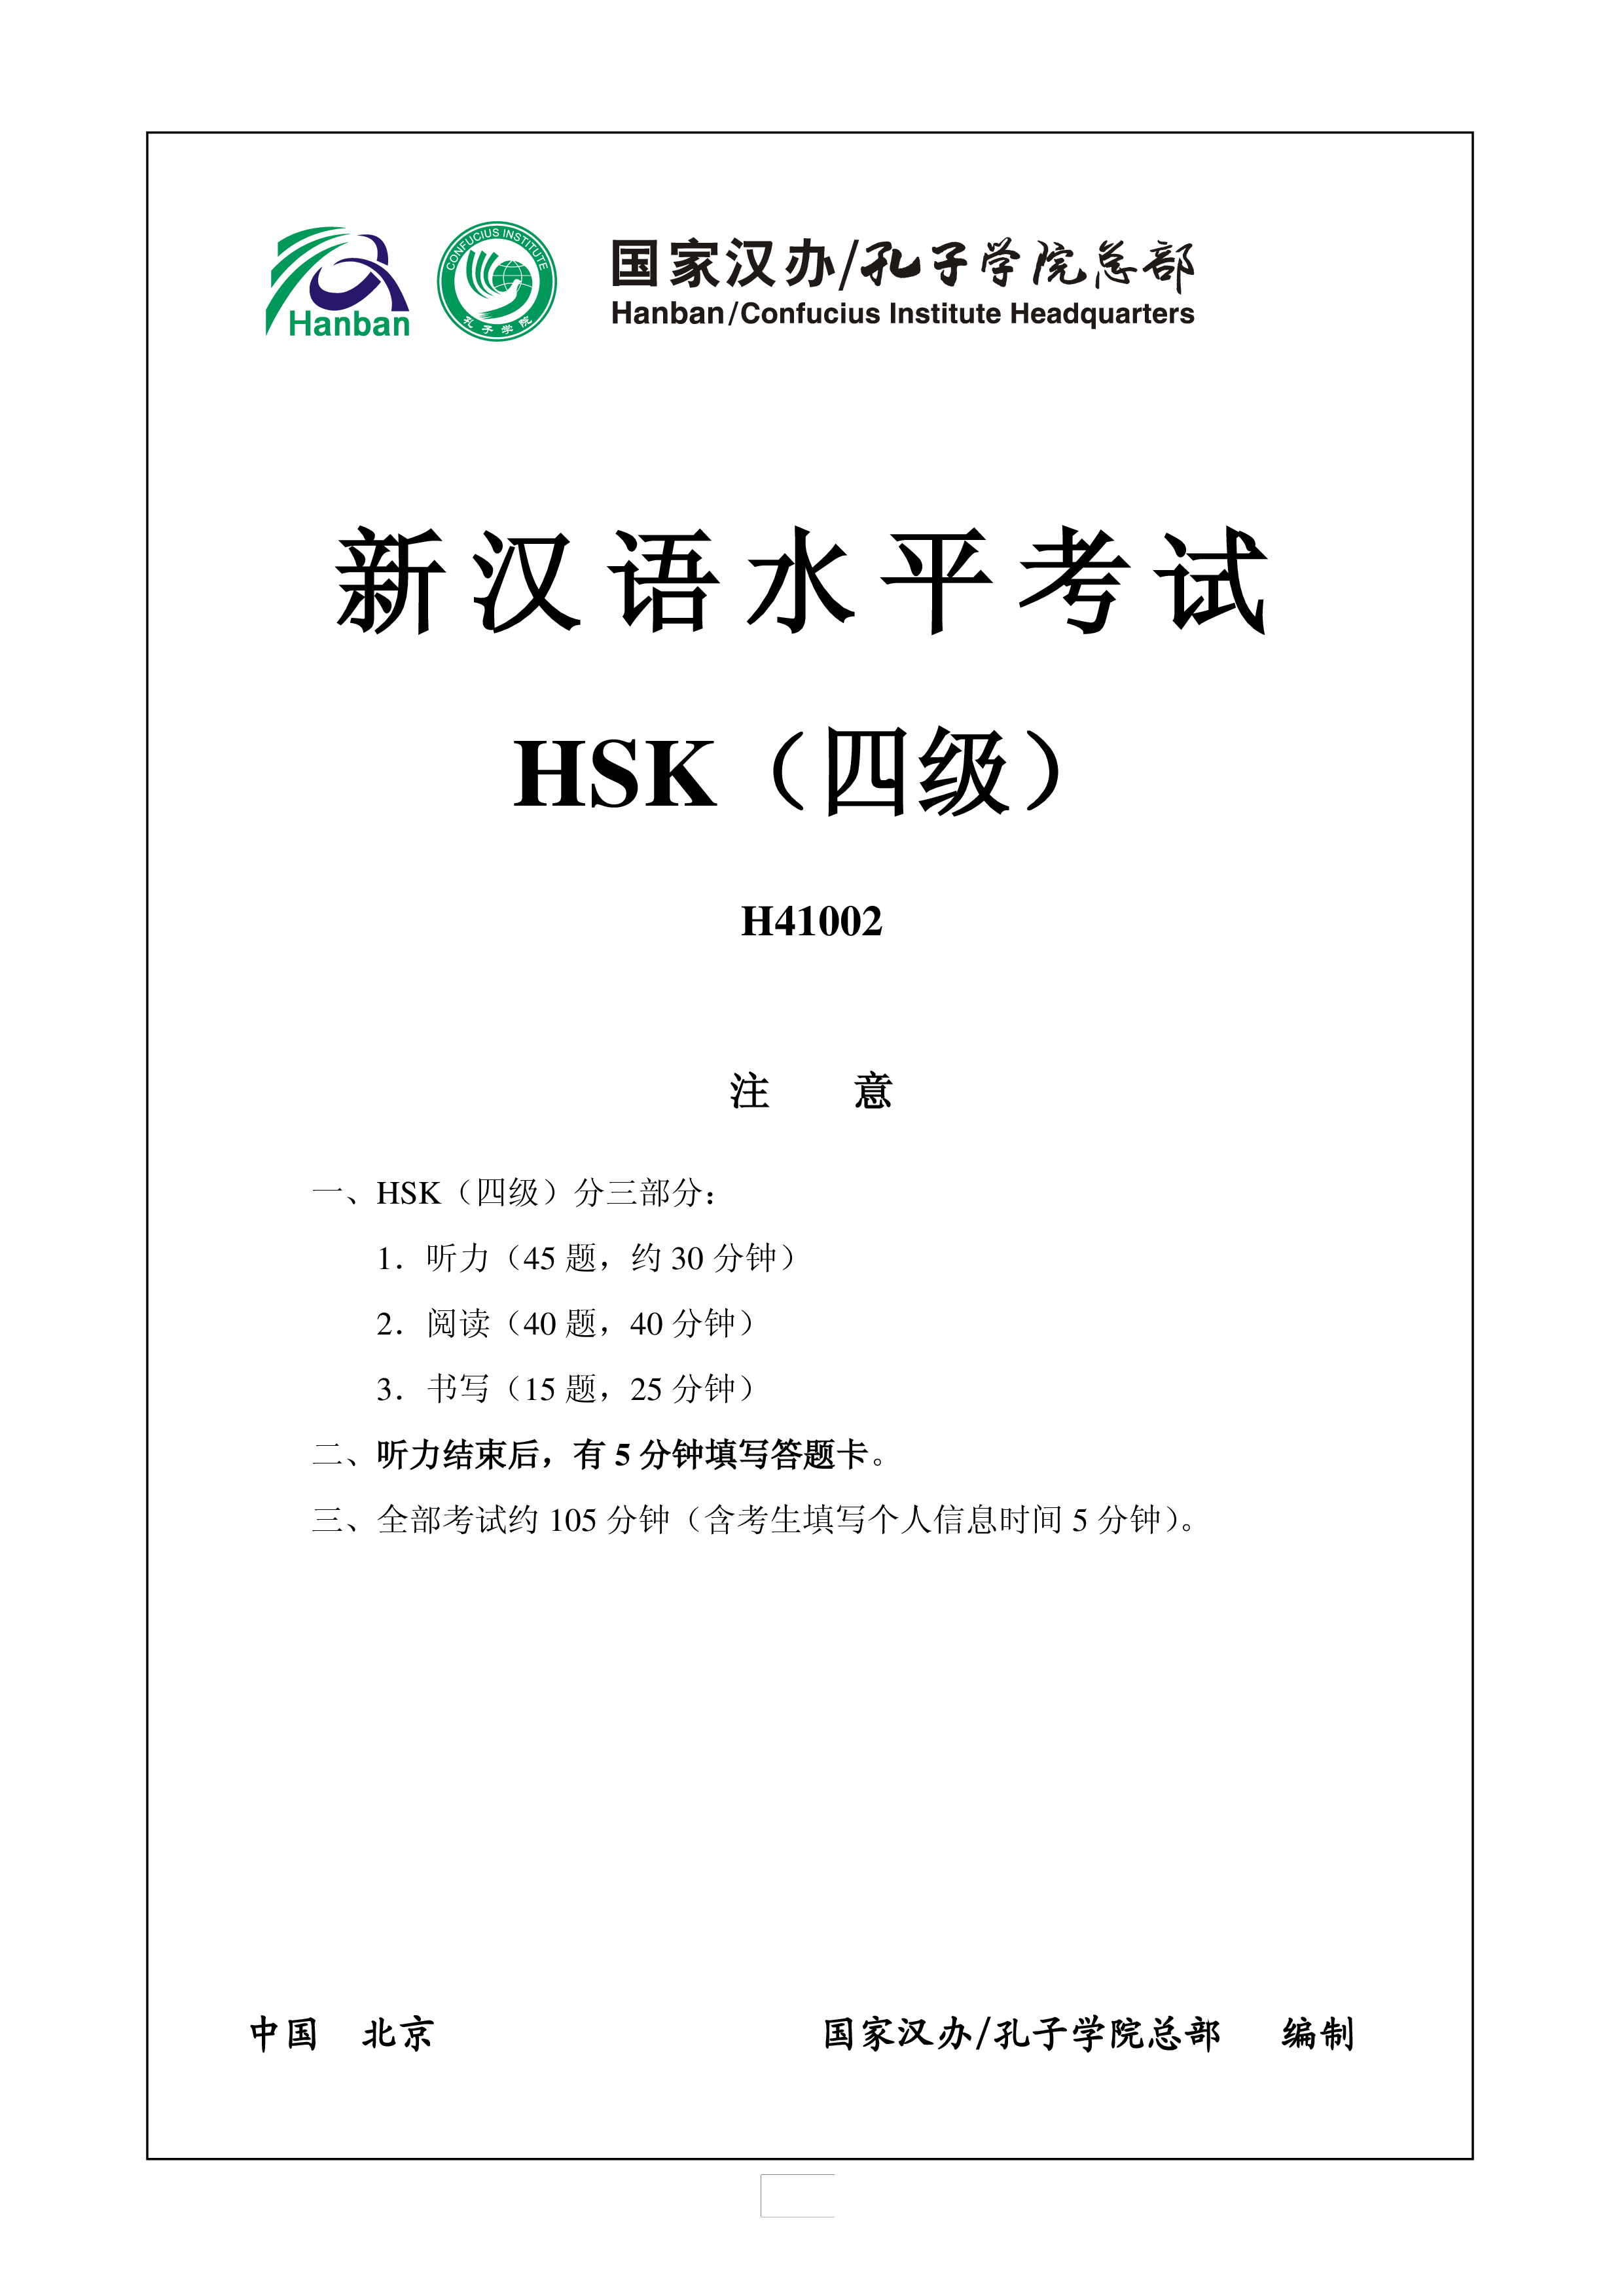 HSK4 H41002 main image